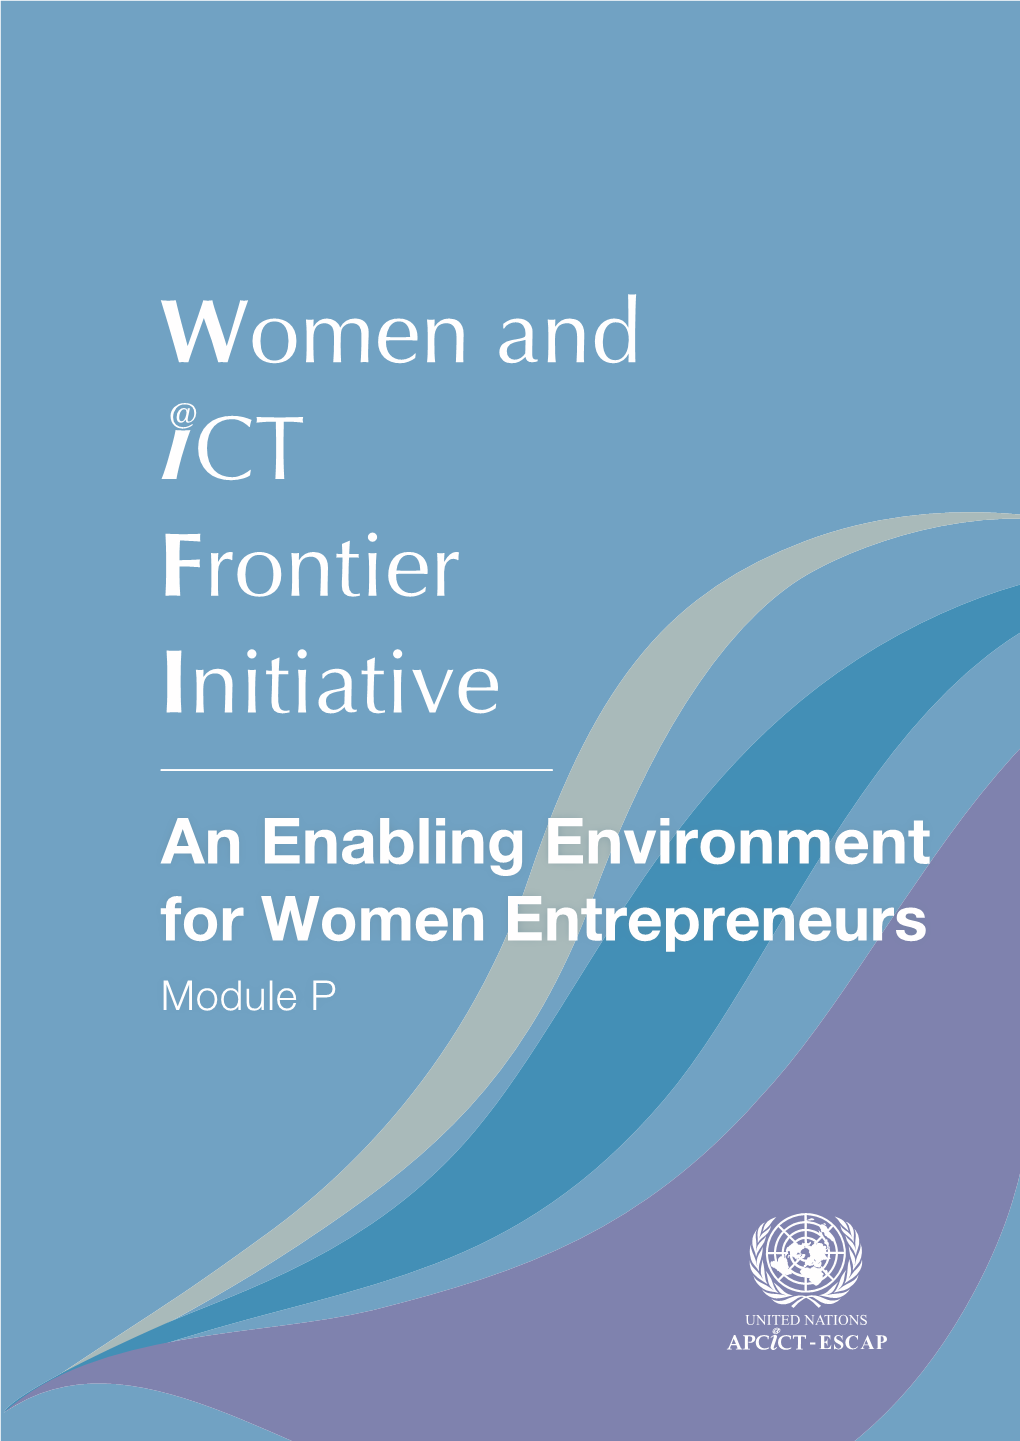 Module P: an Enabling Environment for Women Entrepreneurs